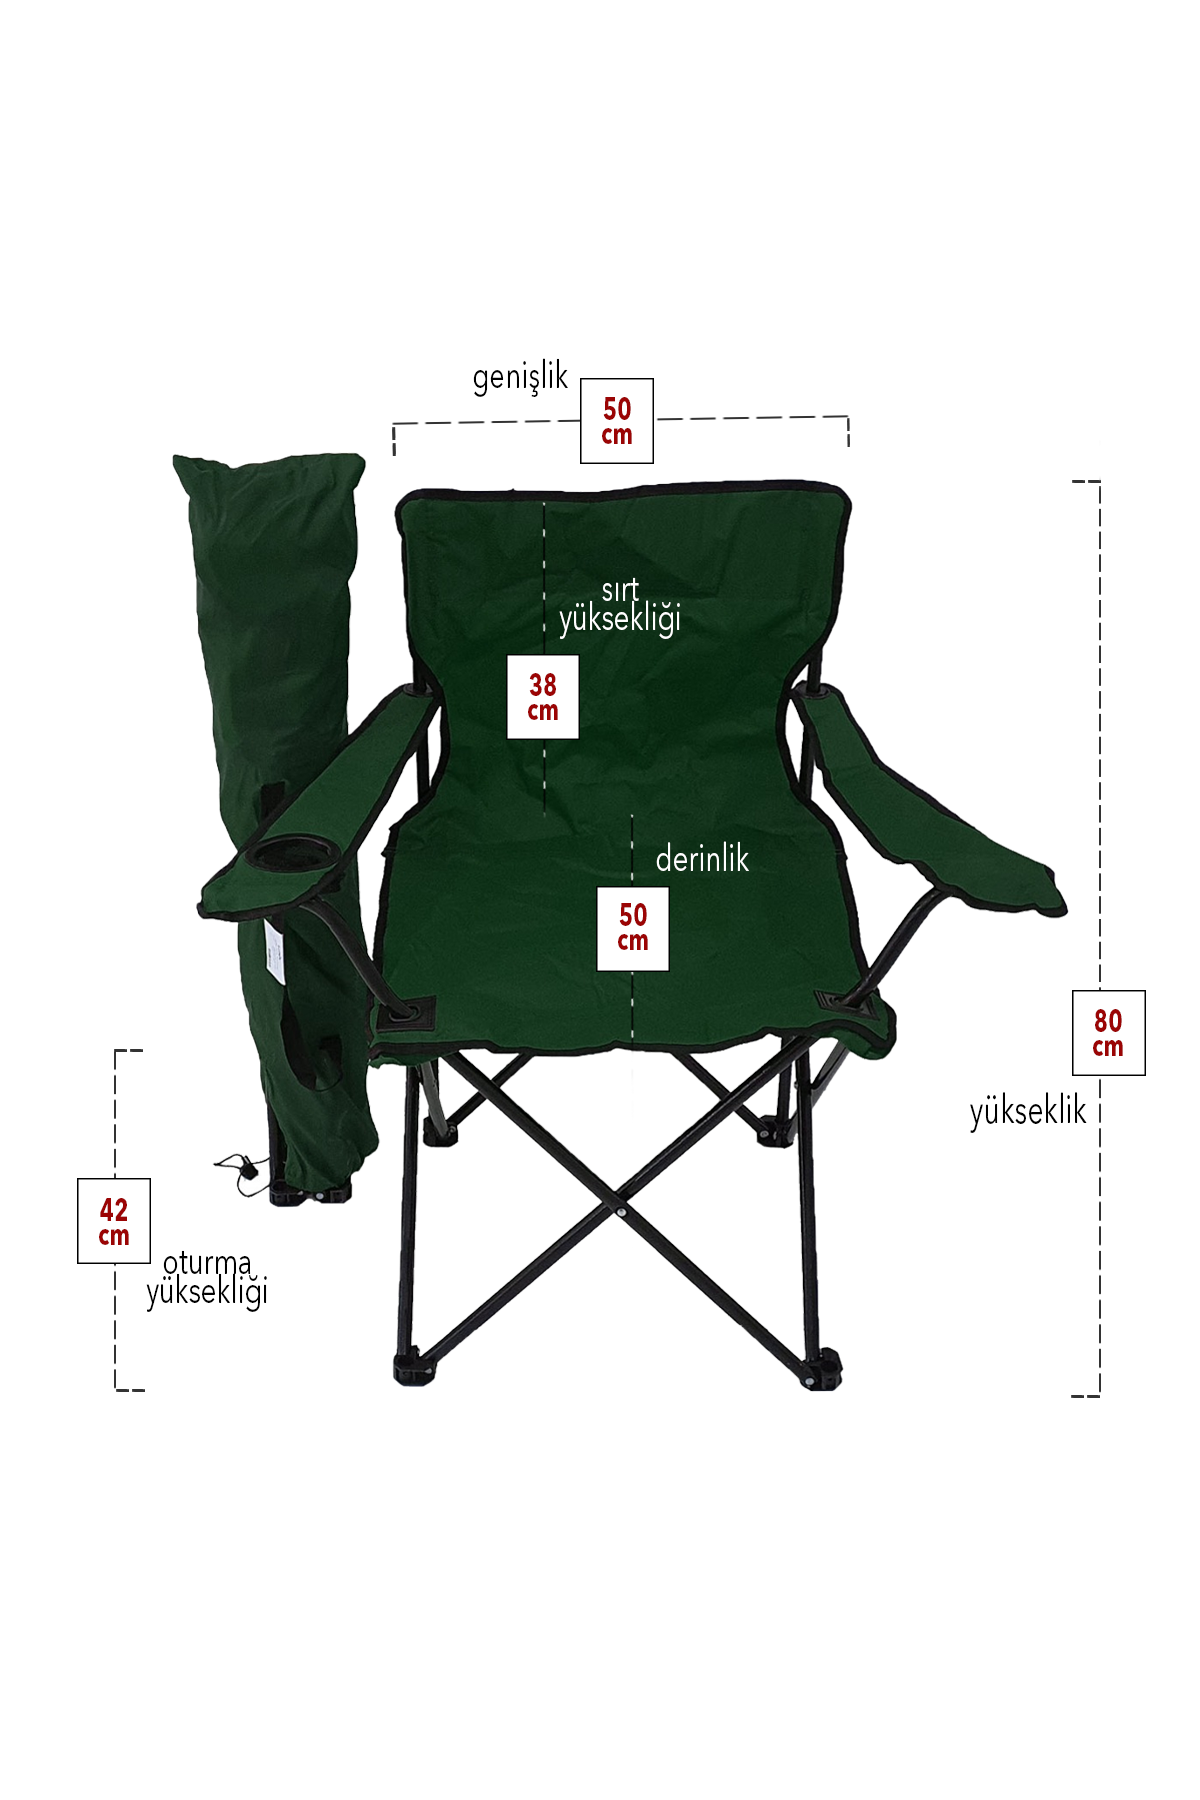 Bofigo 3-Seat Camping Chair Picnic Chair Folding Chair Camping Chair with Carrying Bag Green